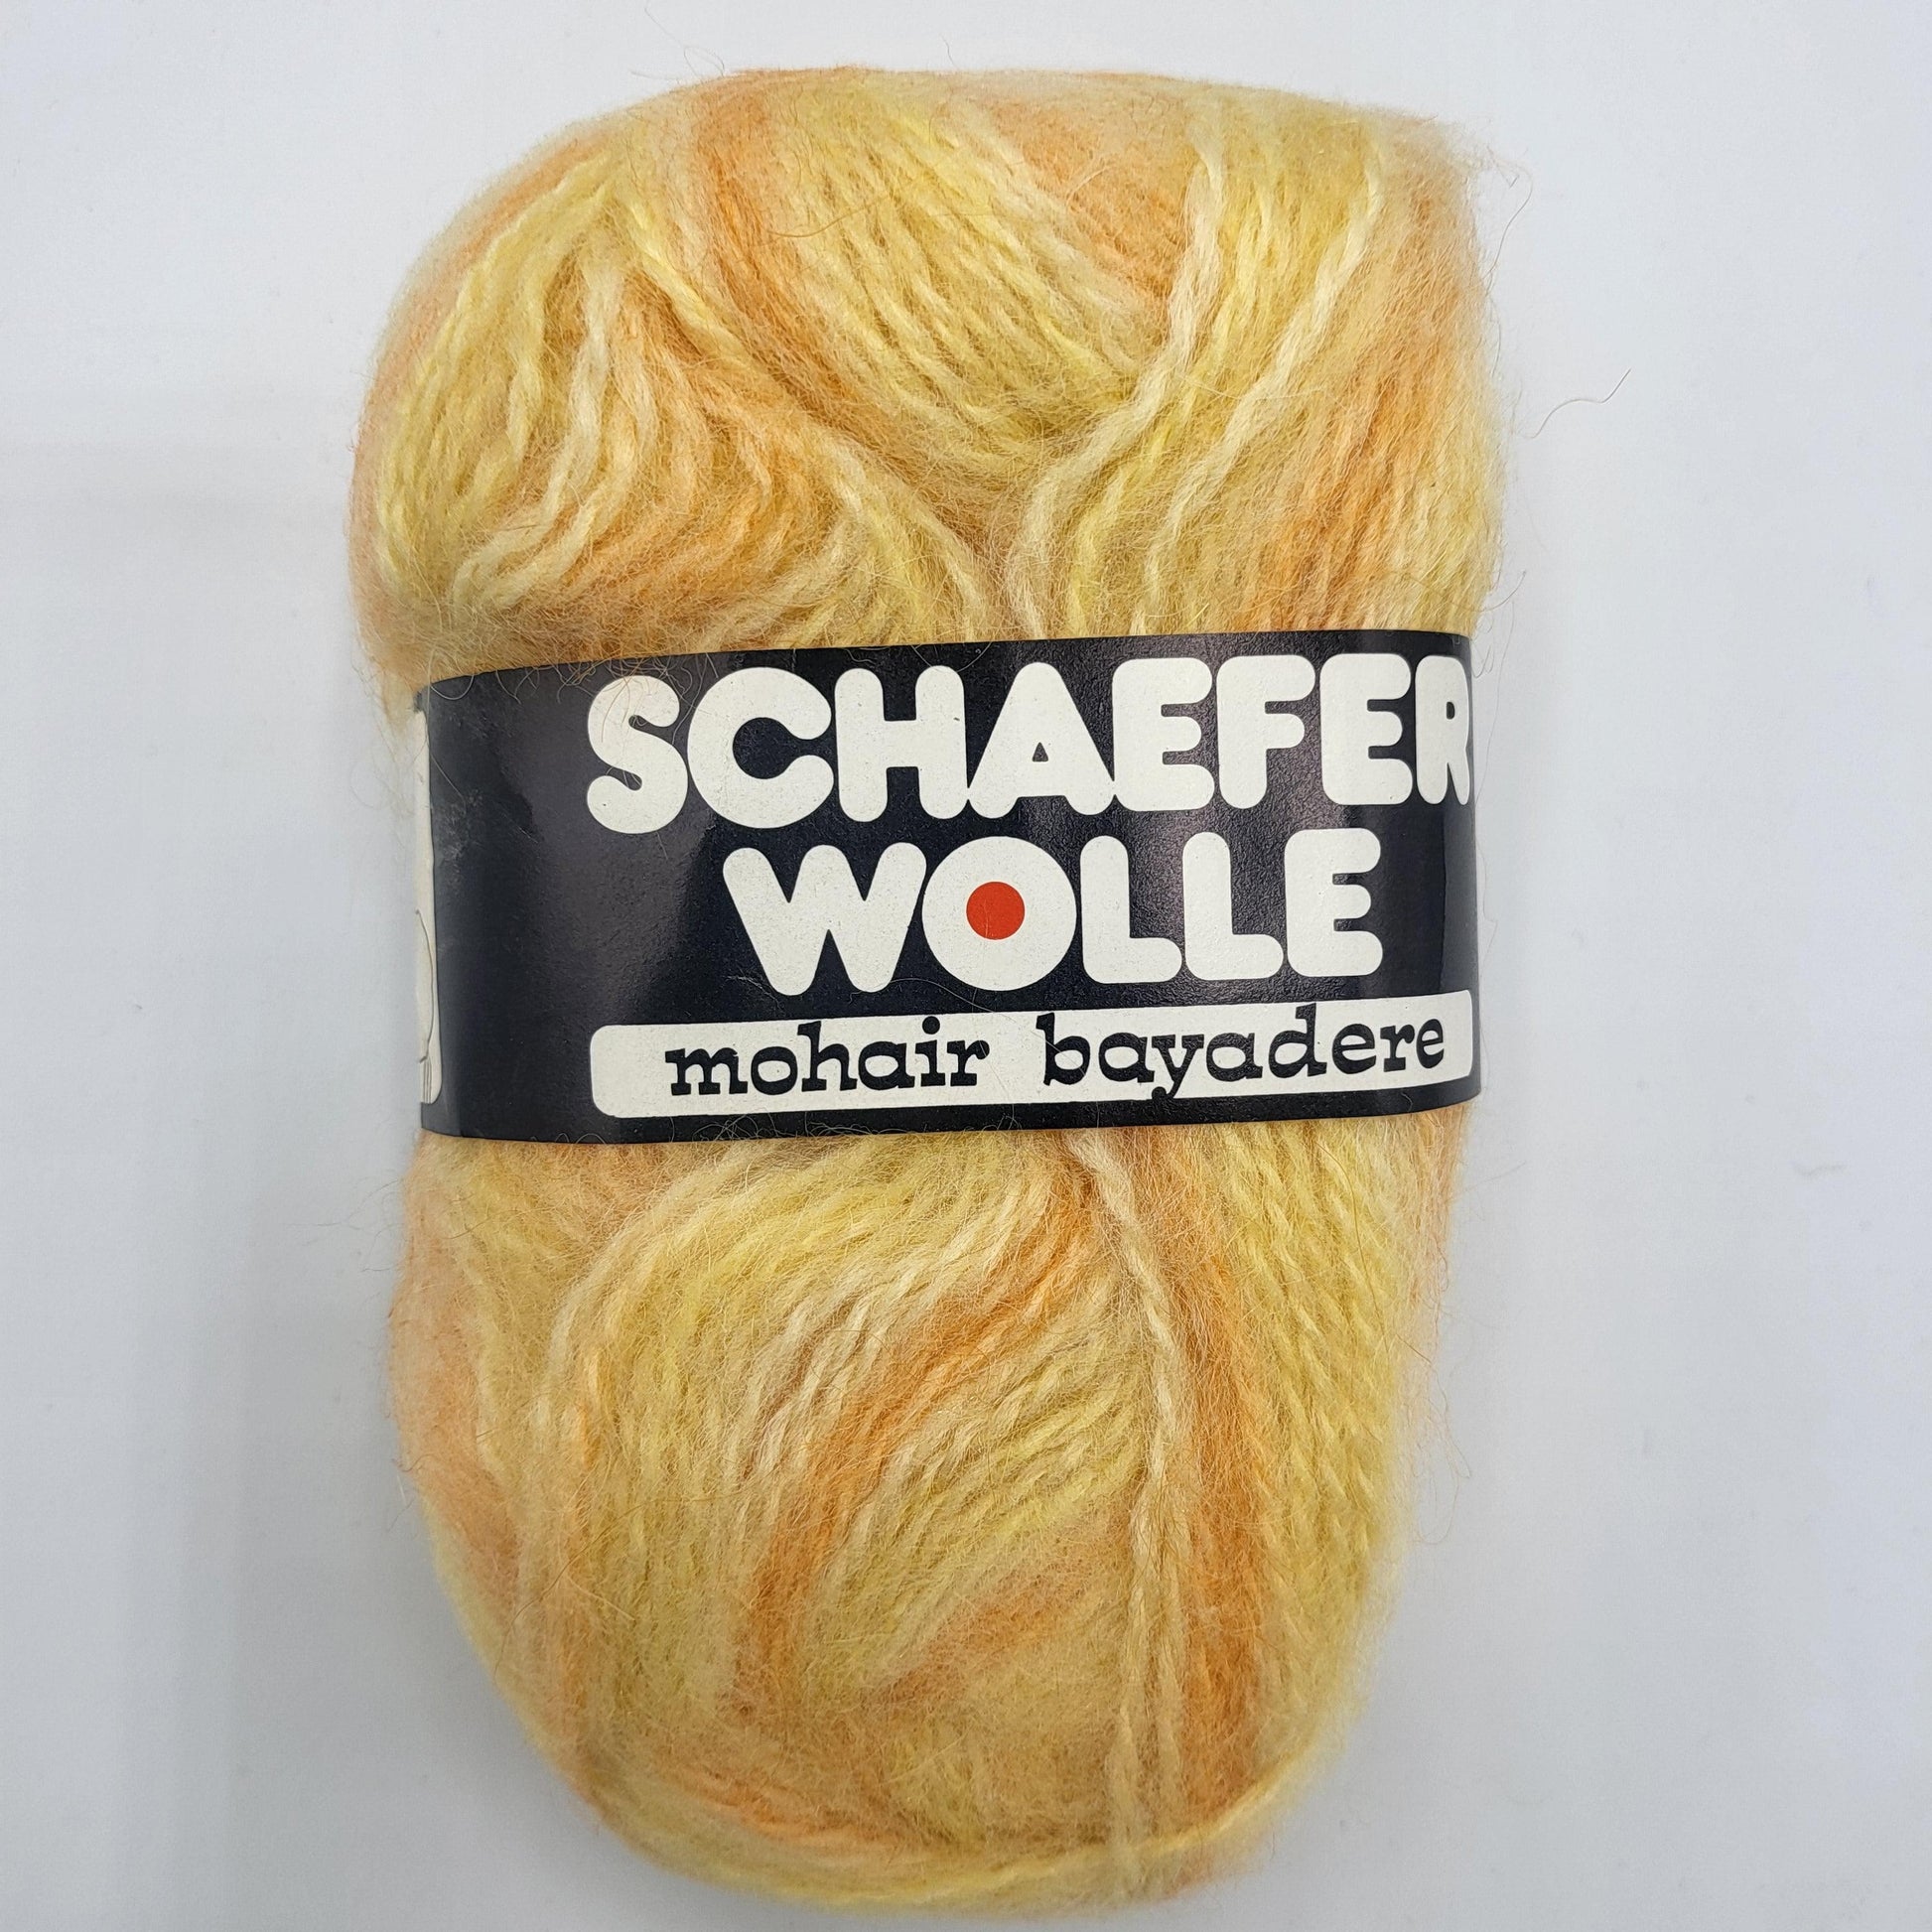 Schaefer Wolle Mohair Bayadere 50gr Garn verschiedenen Farben - EkoDeko.de